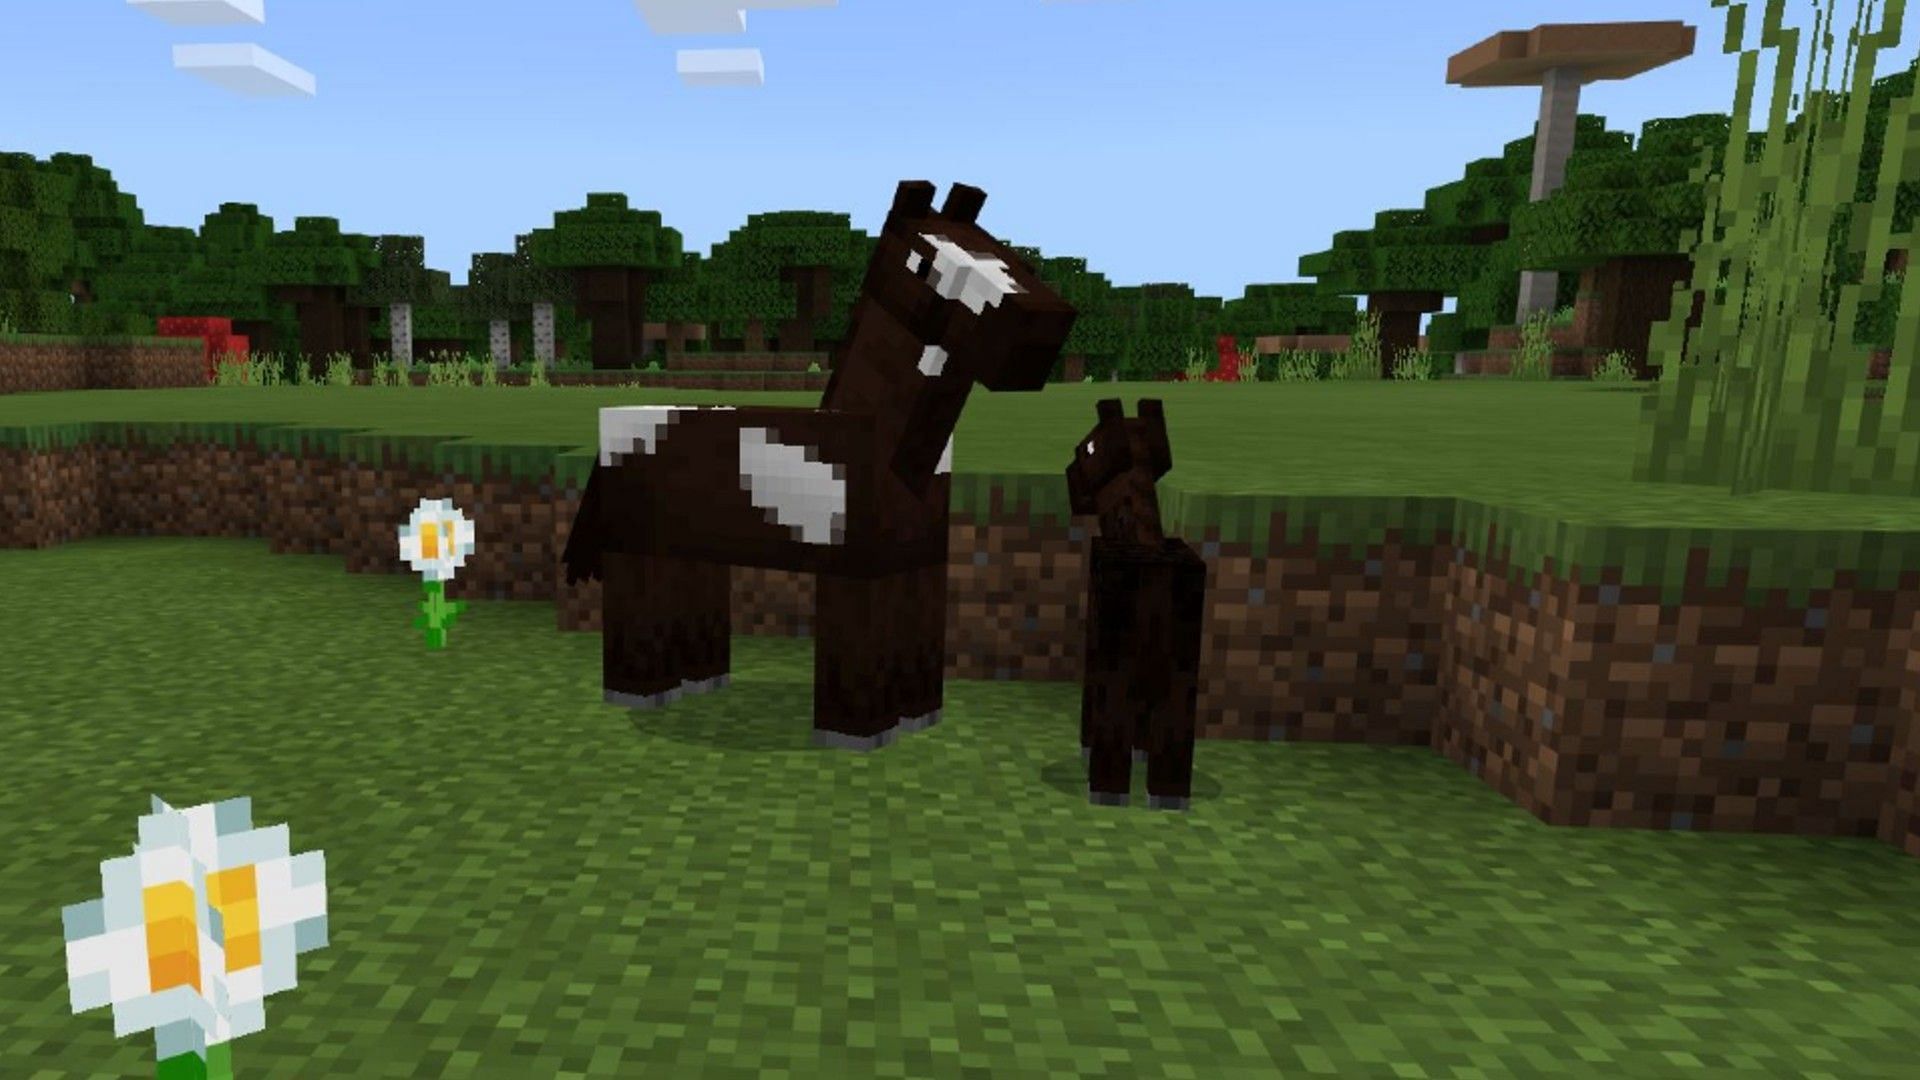 Horses in Minecraft (Image via Minecraft)